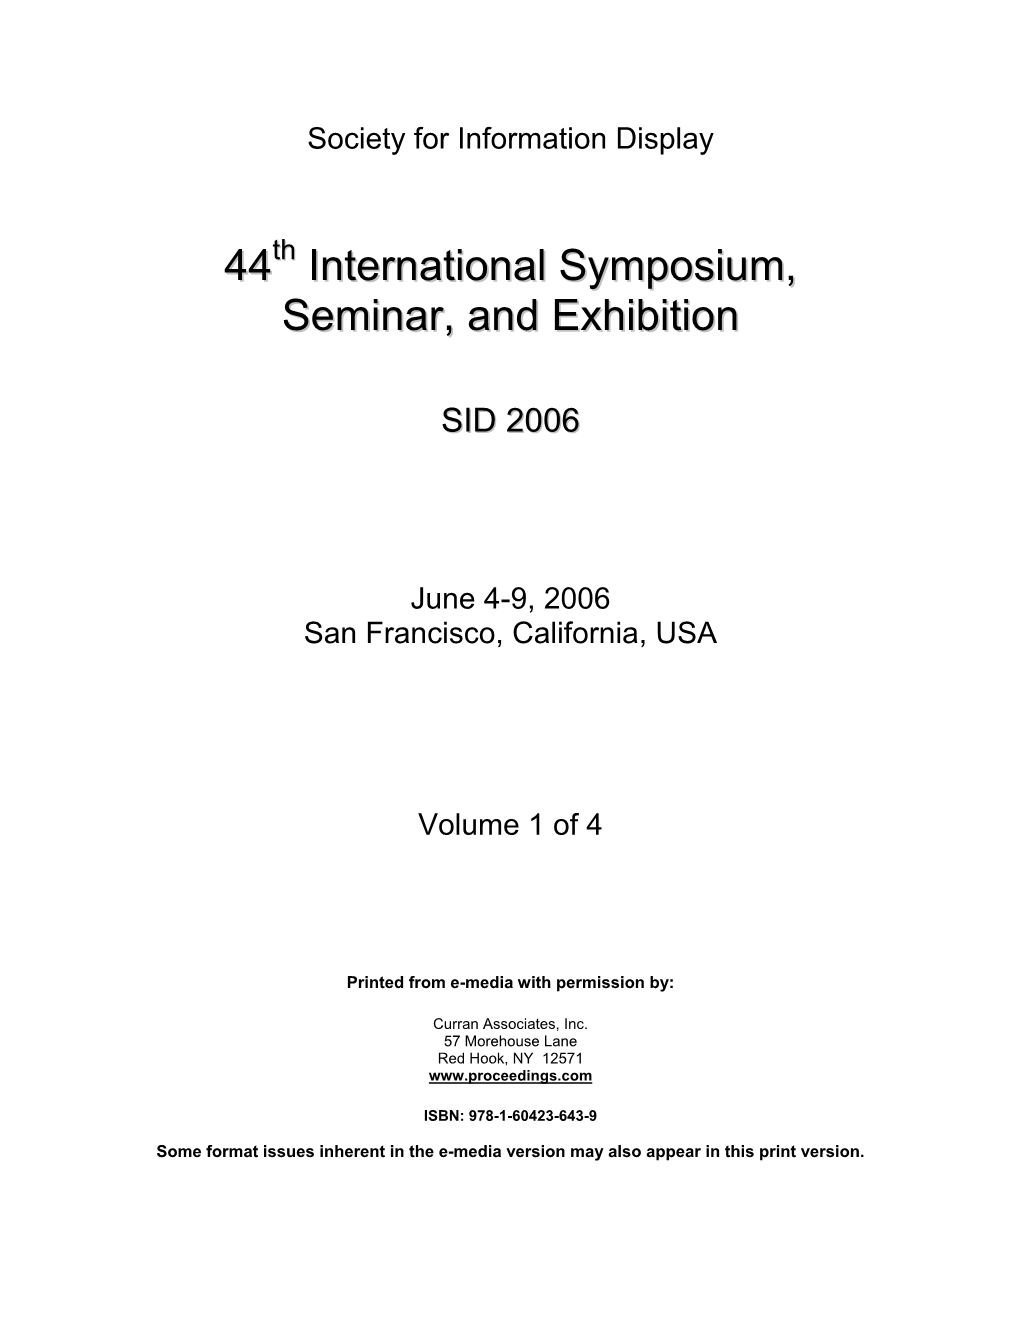 44 International Symposium, Seminar, and Exhibition